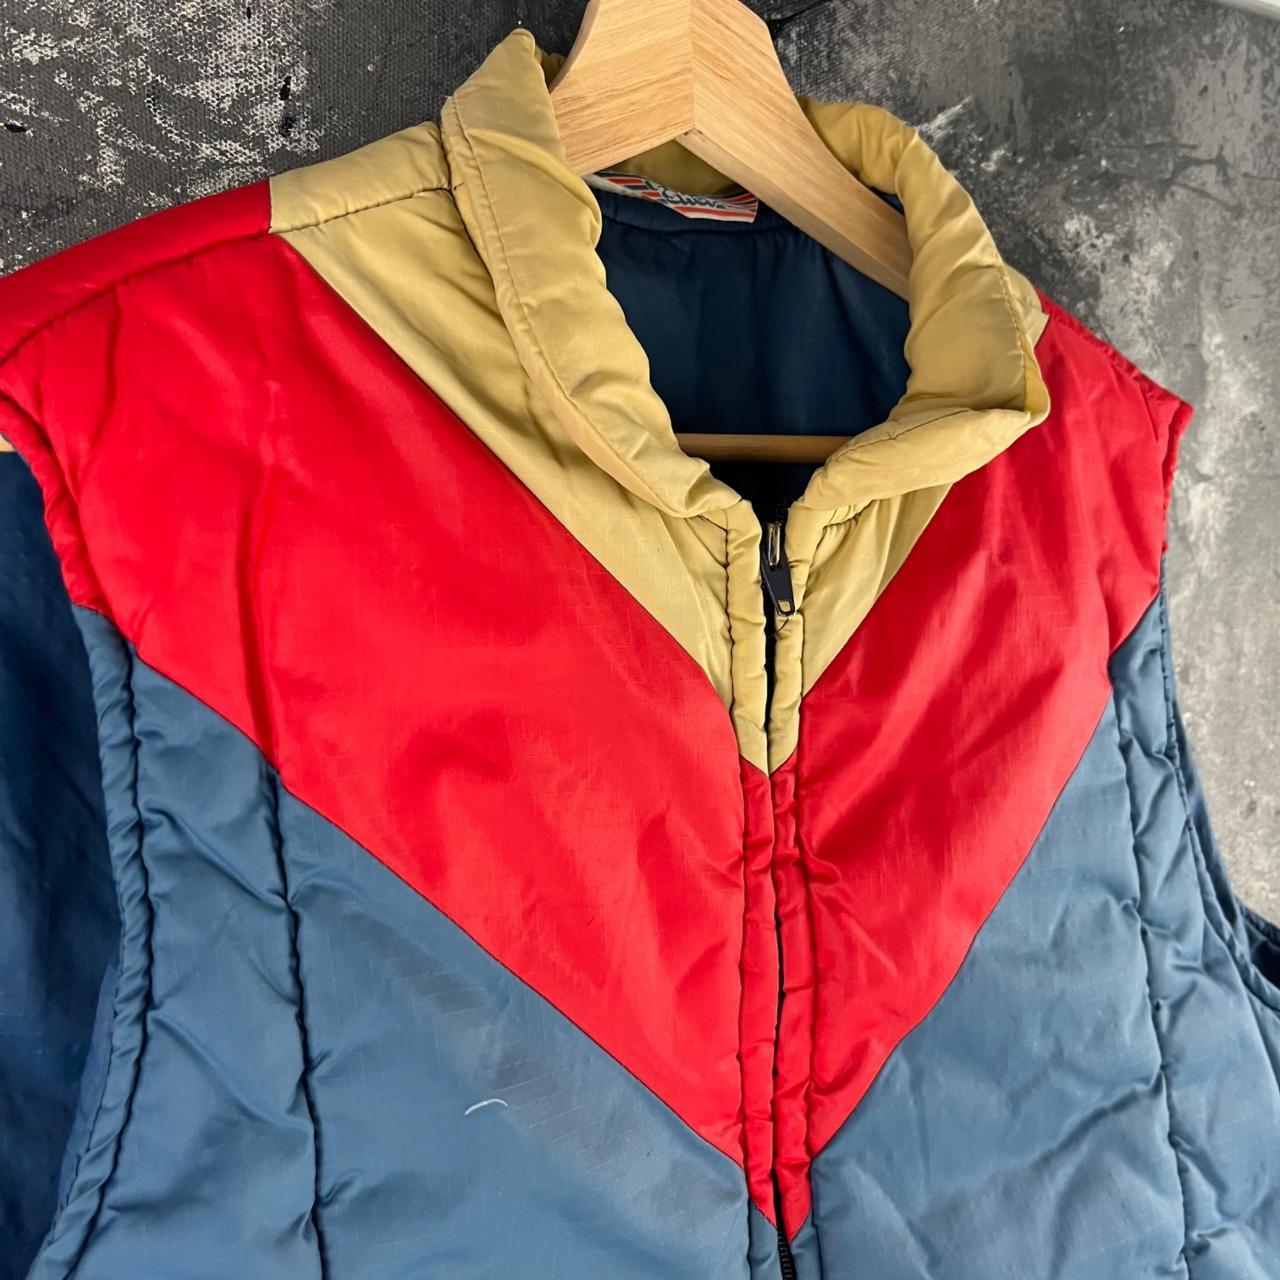 Vintage 80's Sears puffer vest Great colors Fits... - Depop